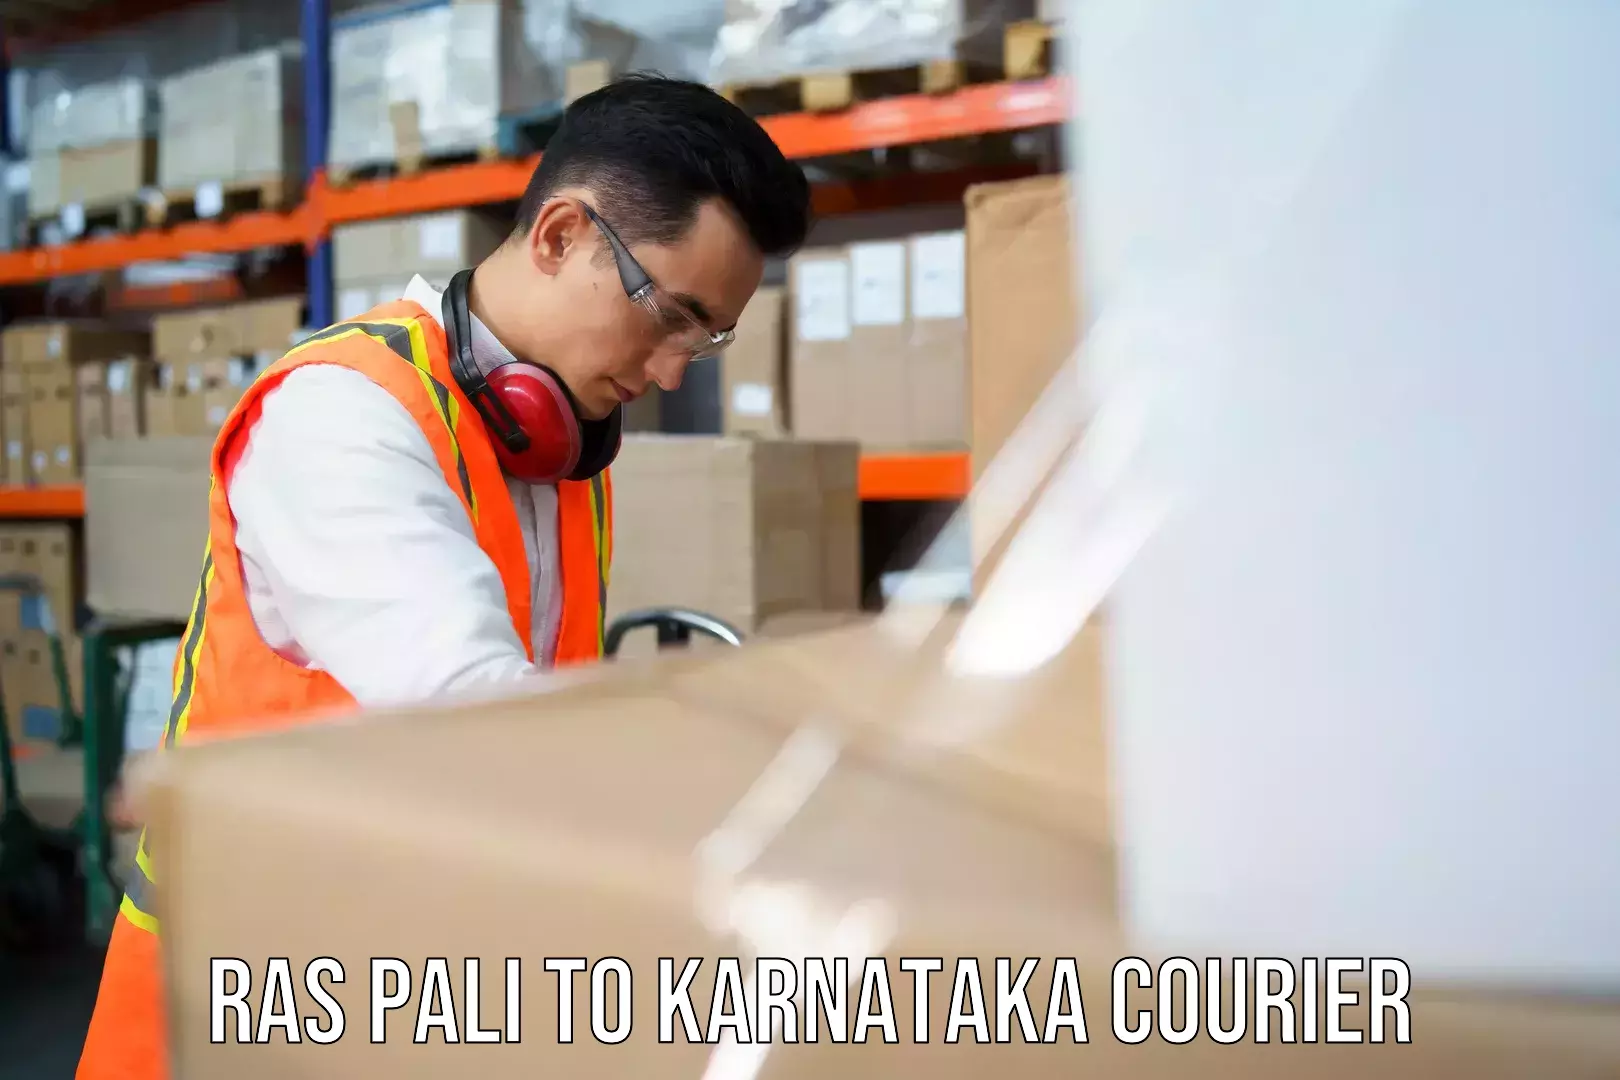 Smart courier technologies Ras Pali to Karnataka